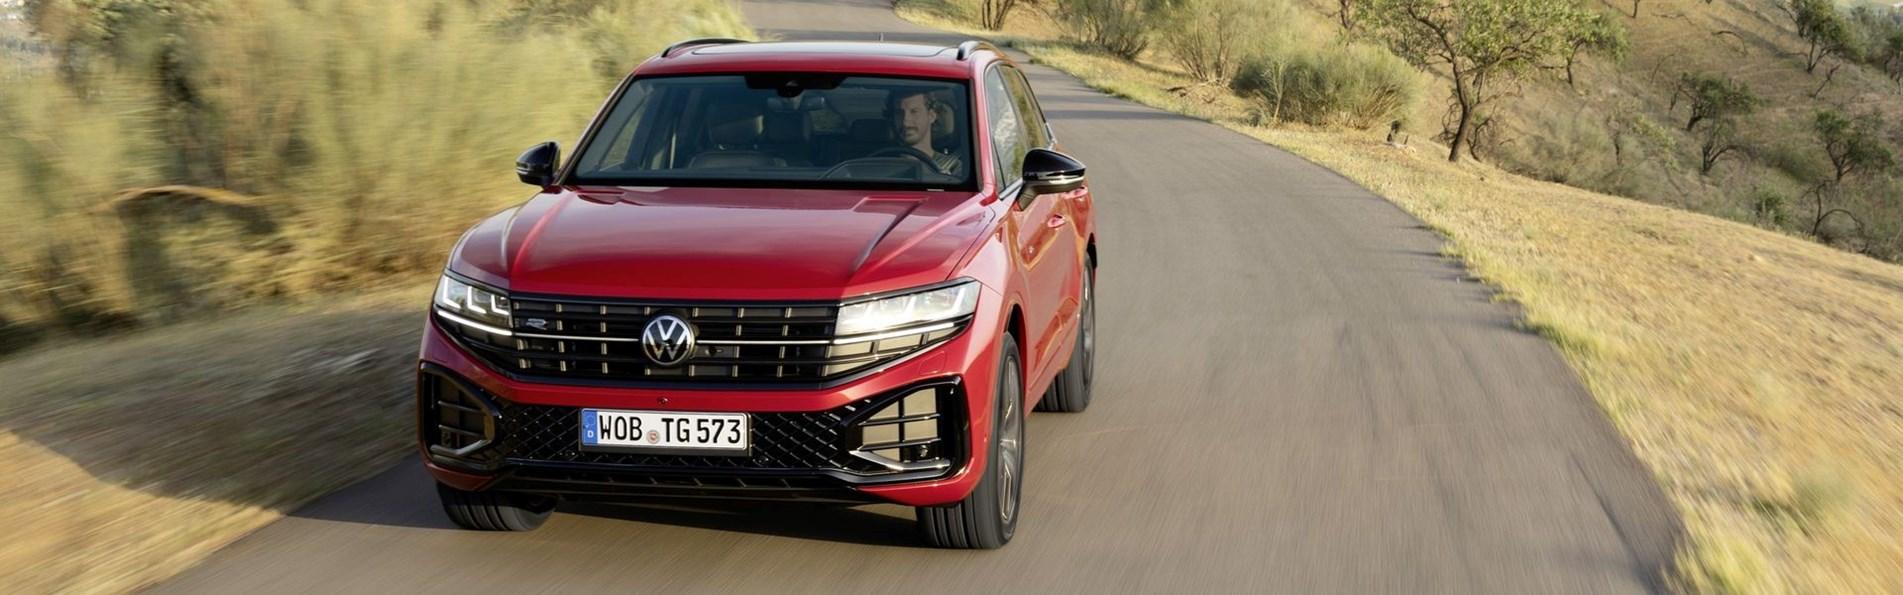 New Volkswagen Touareg for sale NI, Belfast & Mallusk